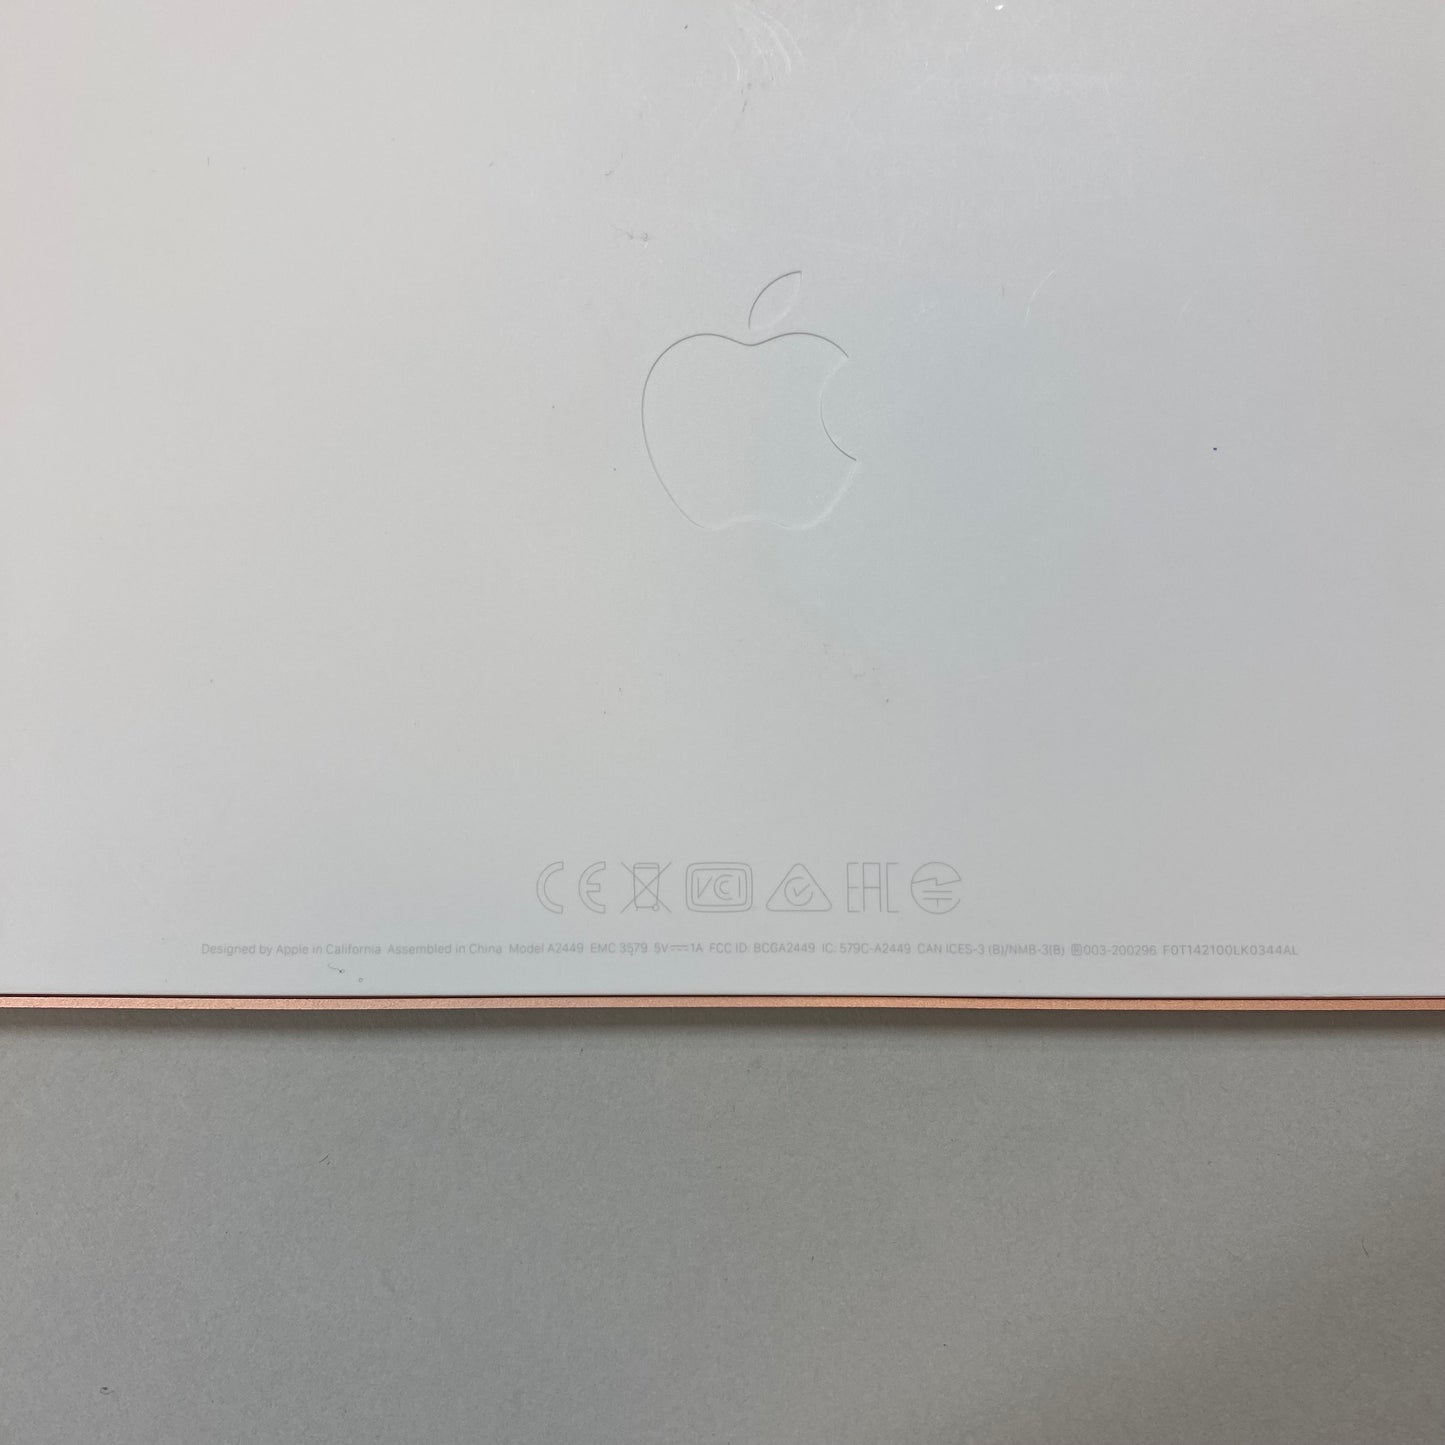 2021 Apple iMac 24" M1 3.2GHz 8GB RAM 512GB SSD Pink A2438